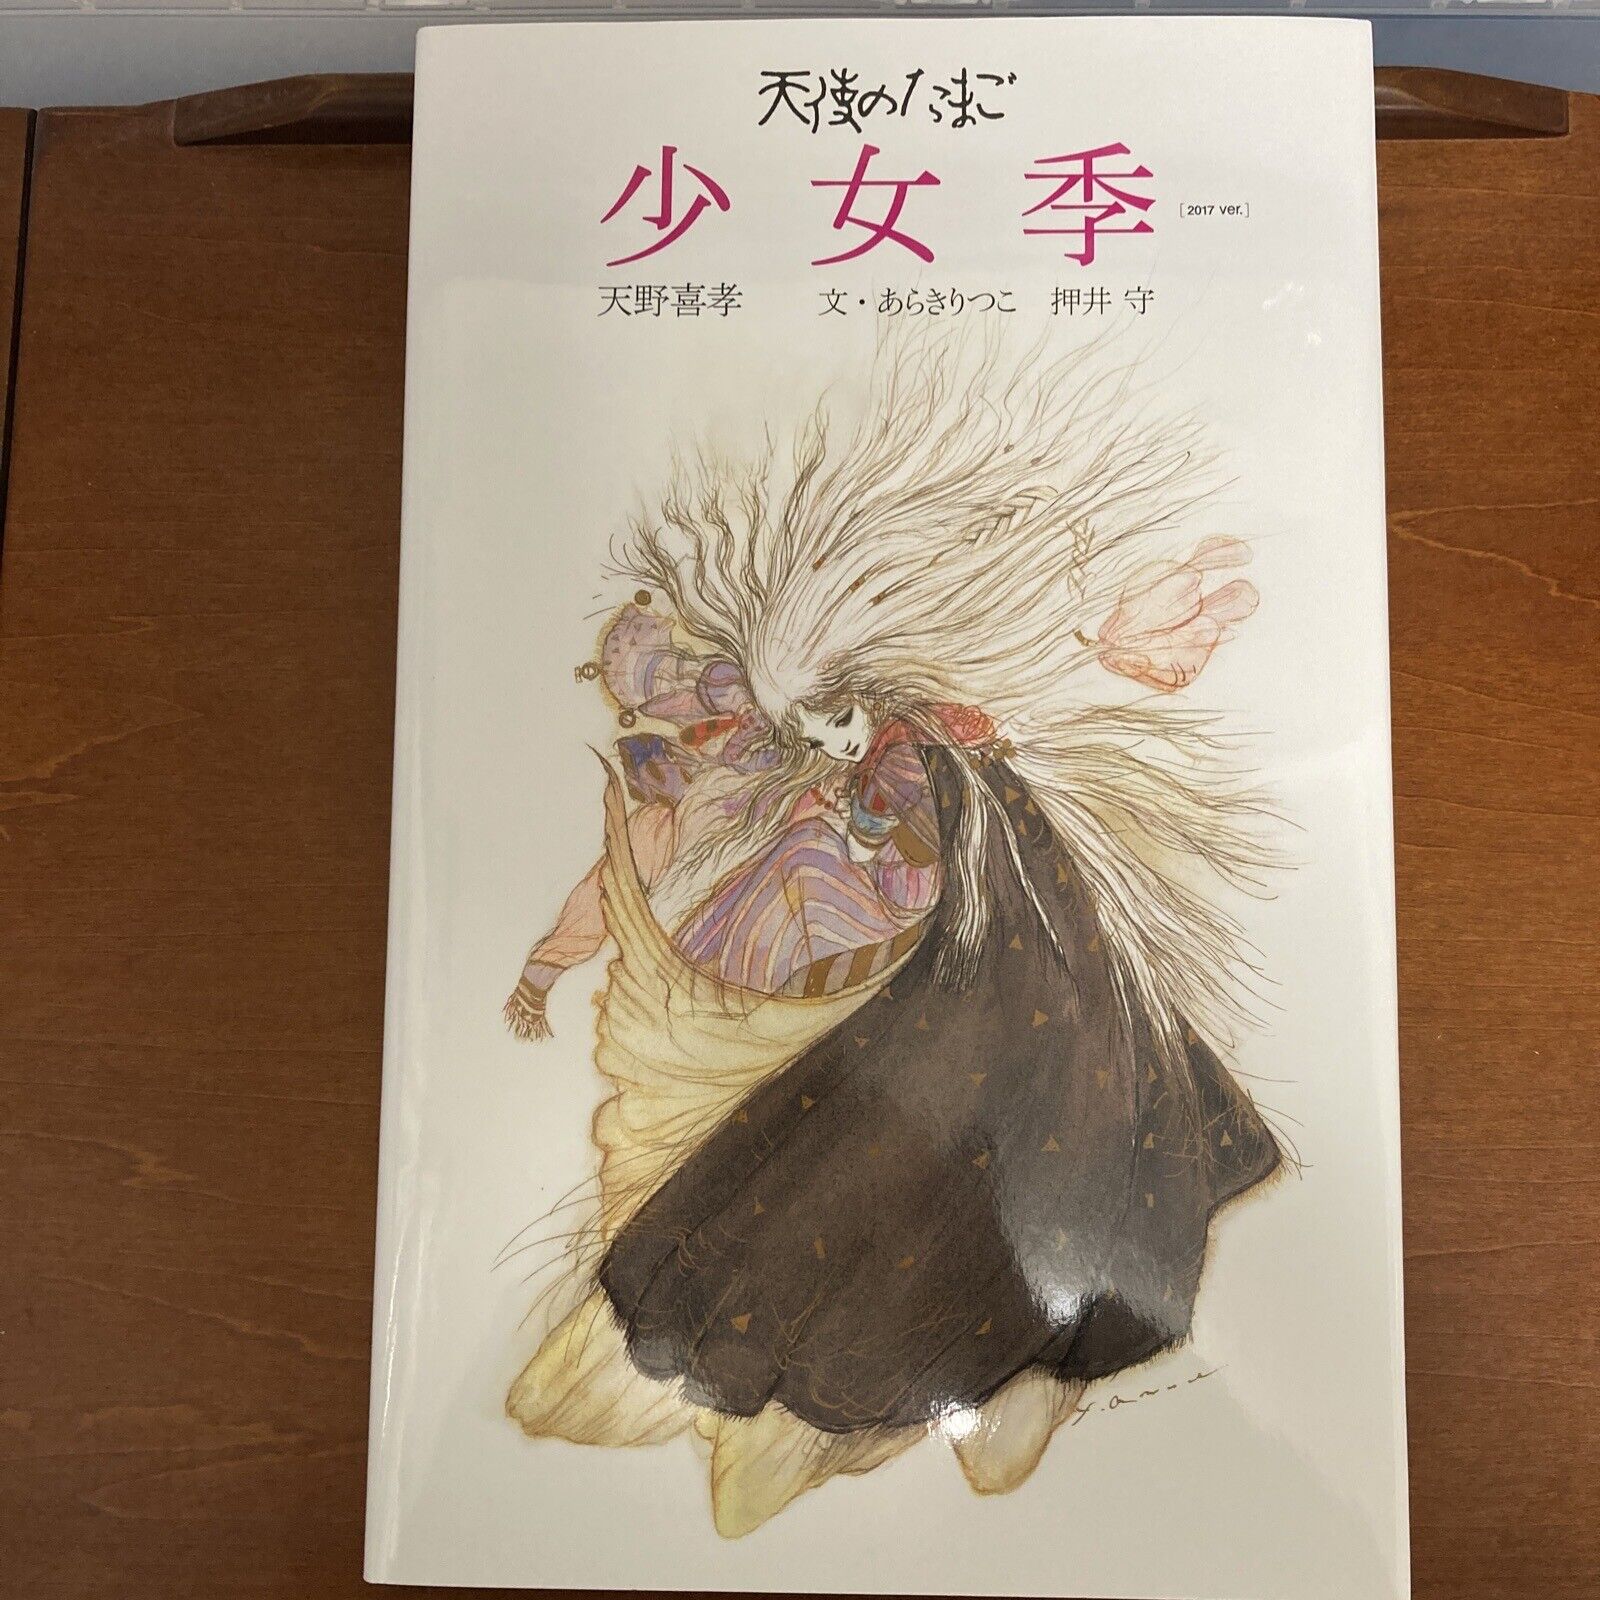 Angel's Egg Shojoki Yoshitaka Amano Mamoru Oshii 2017 ver. Art Book Illustration